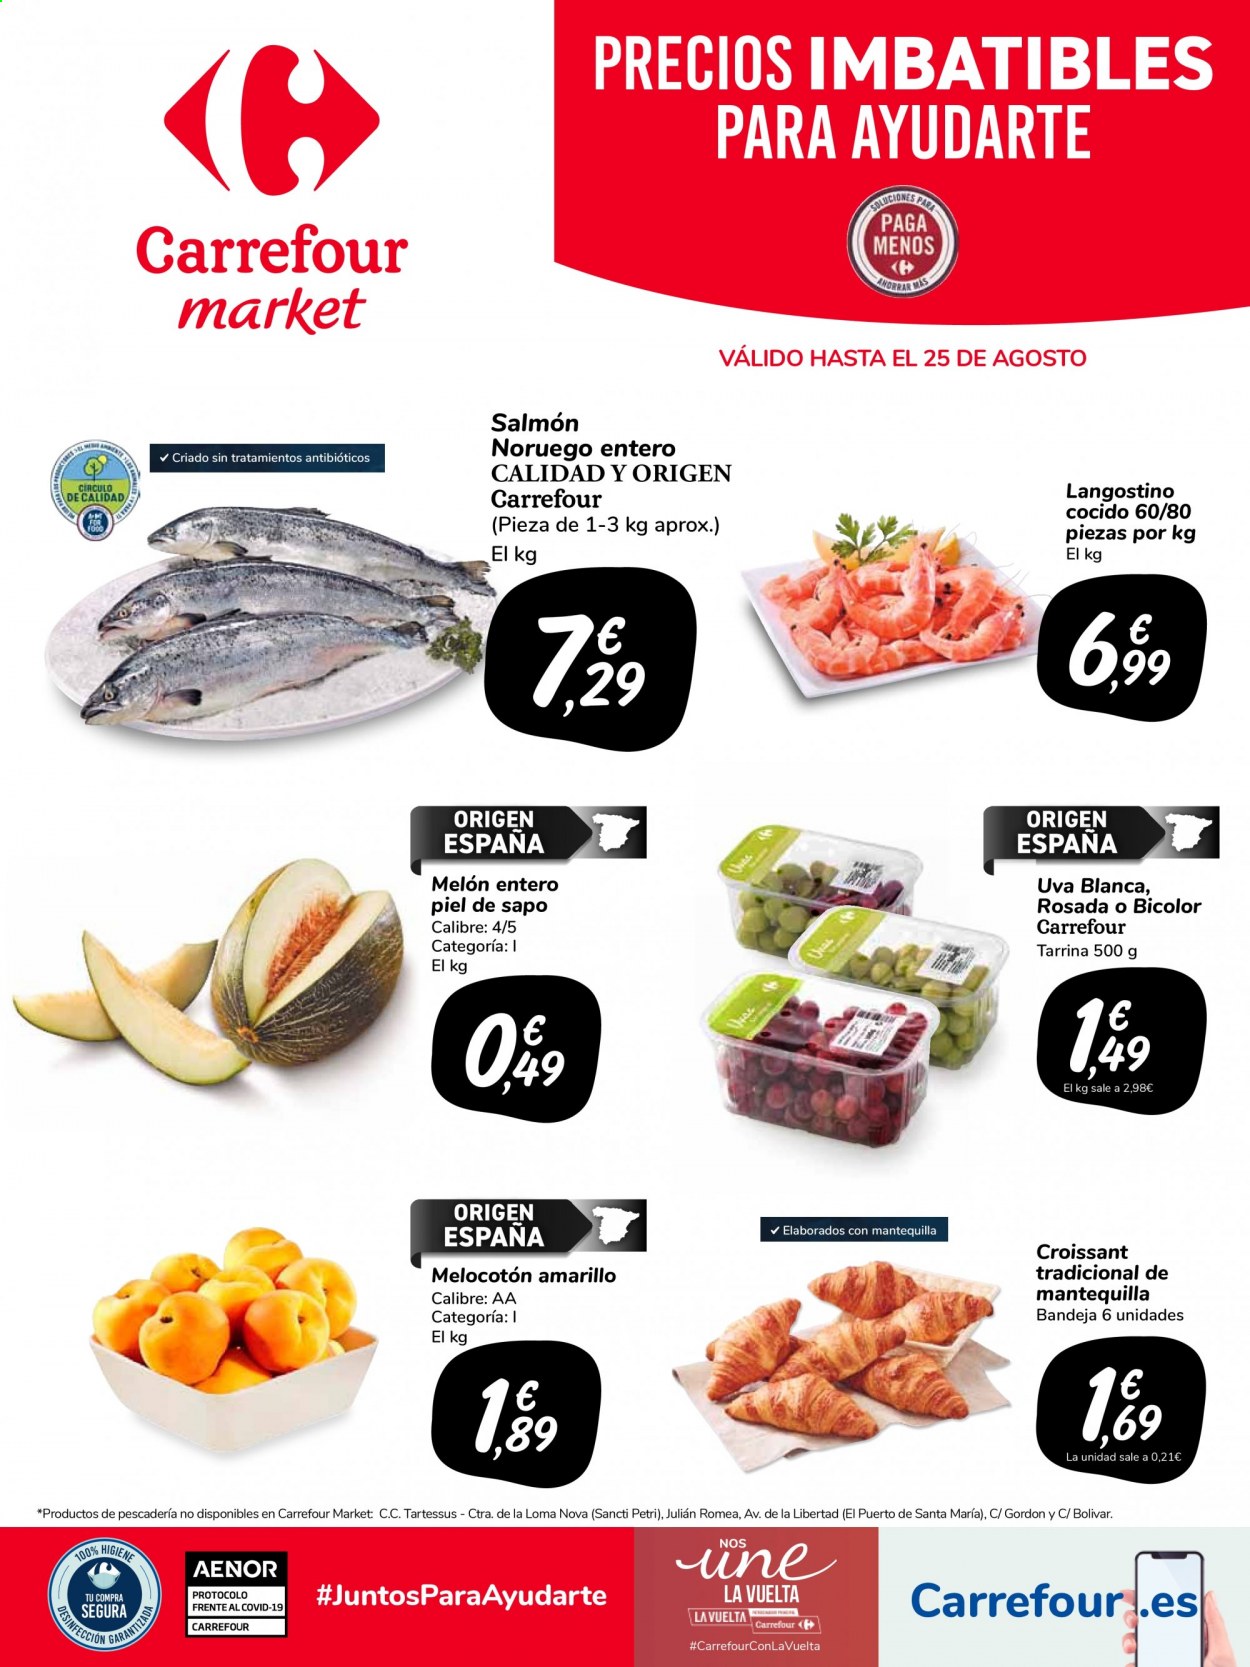 thumbnail - Folleto actual Carrefour - 19/08/21 - 25/08/21 - Ventas - uva, melocotón, croissant, langostino, salmón. Página 1.